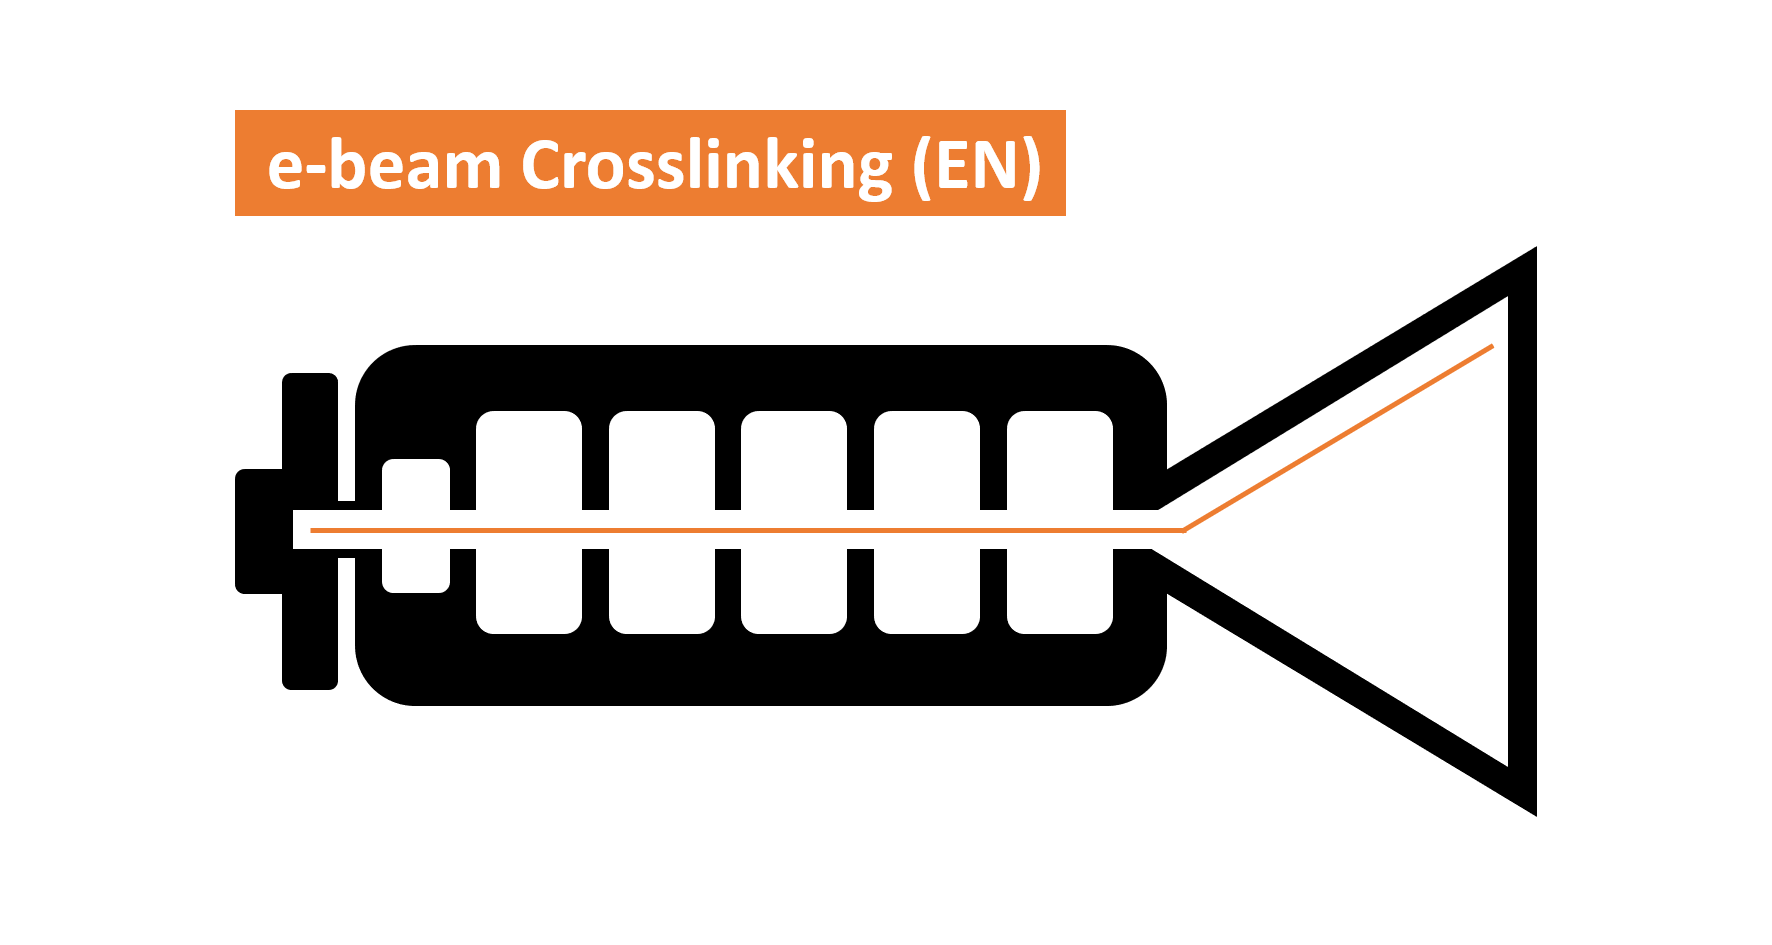 e-beam crosslinking training